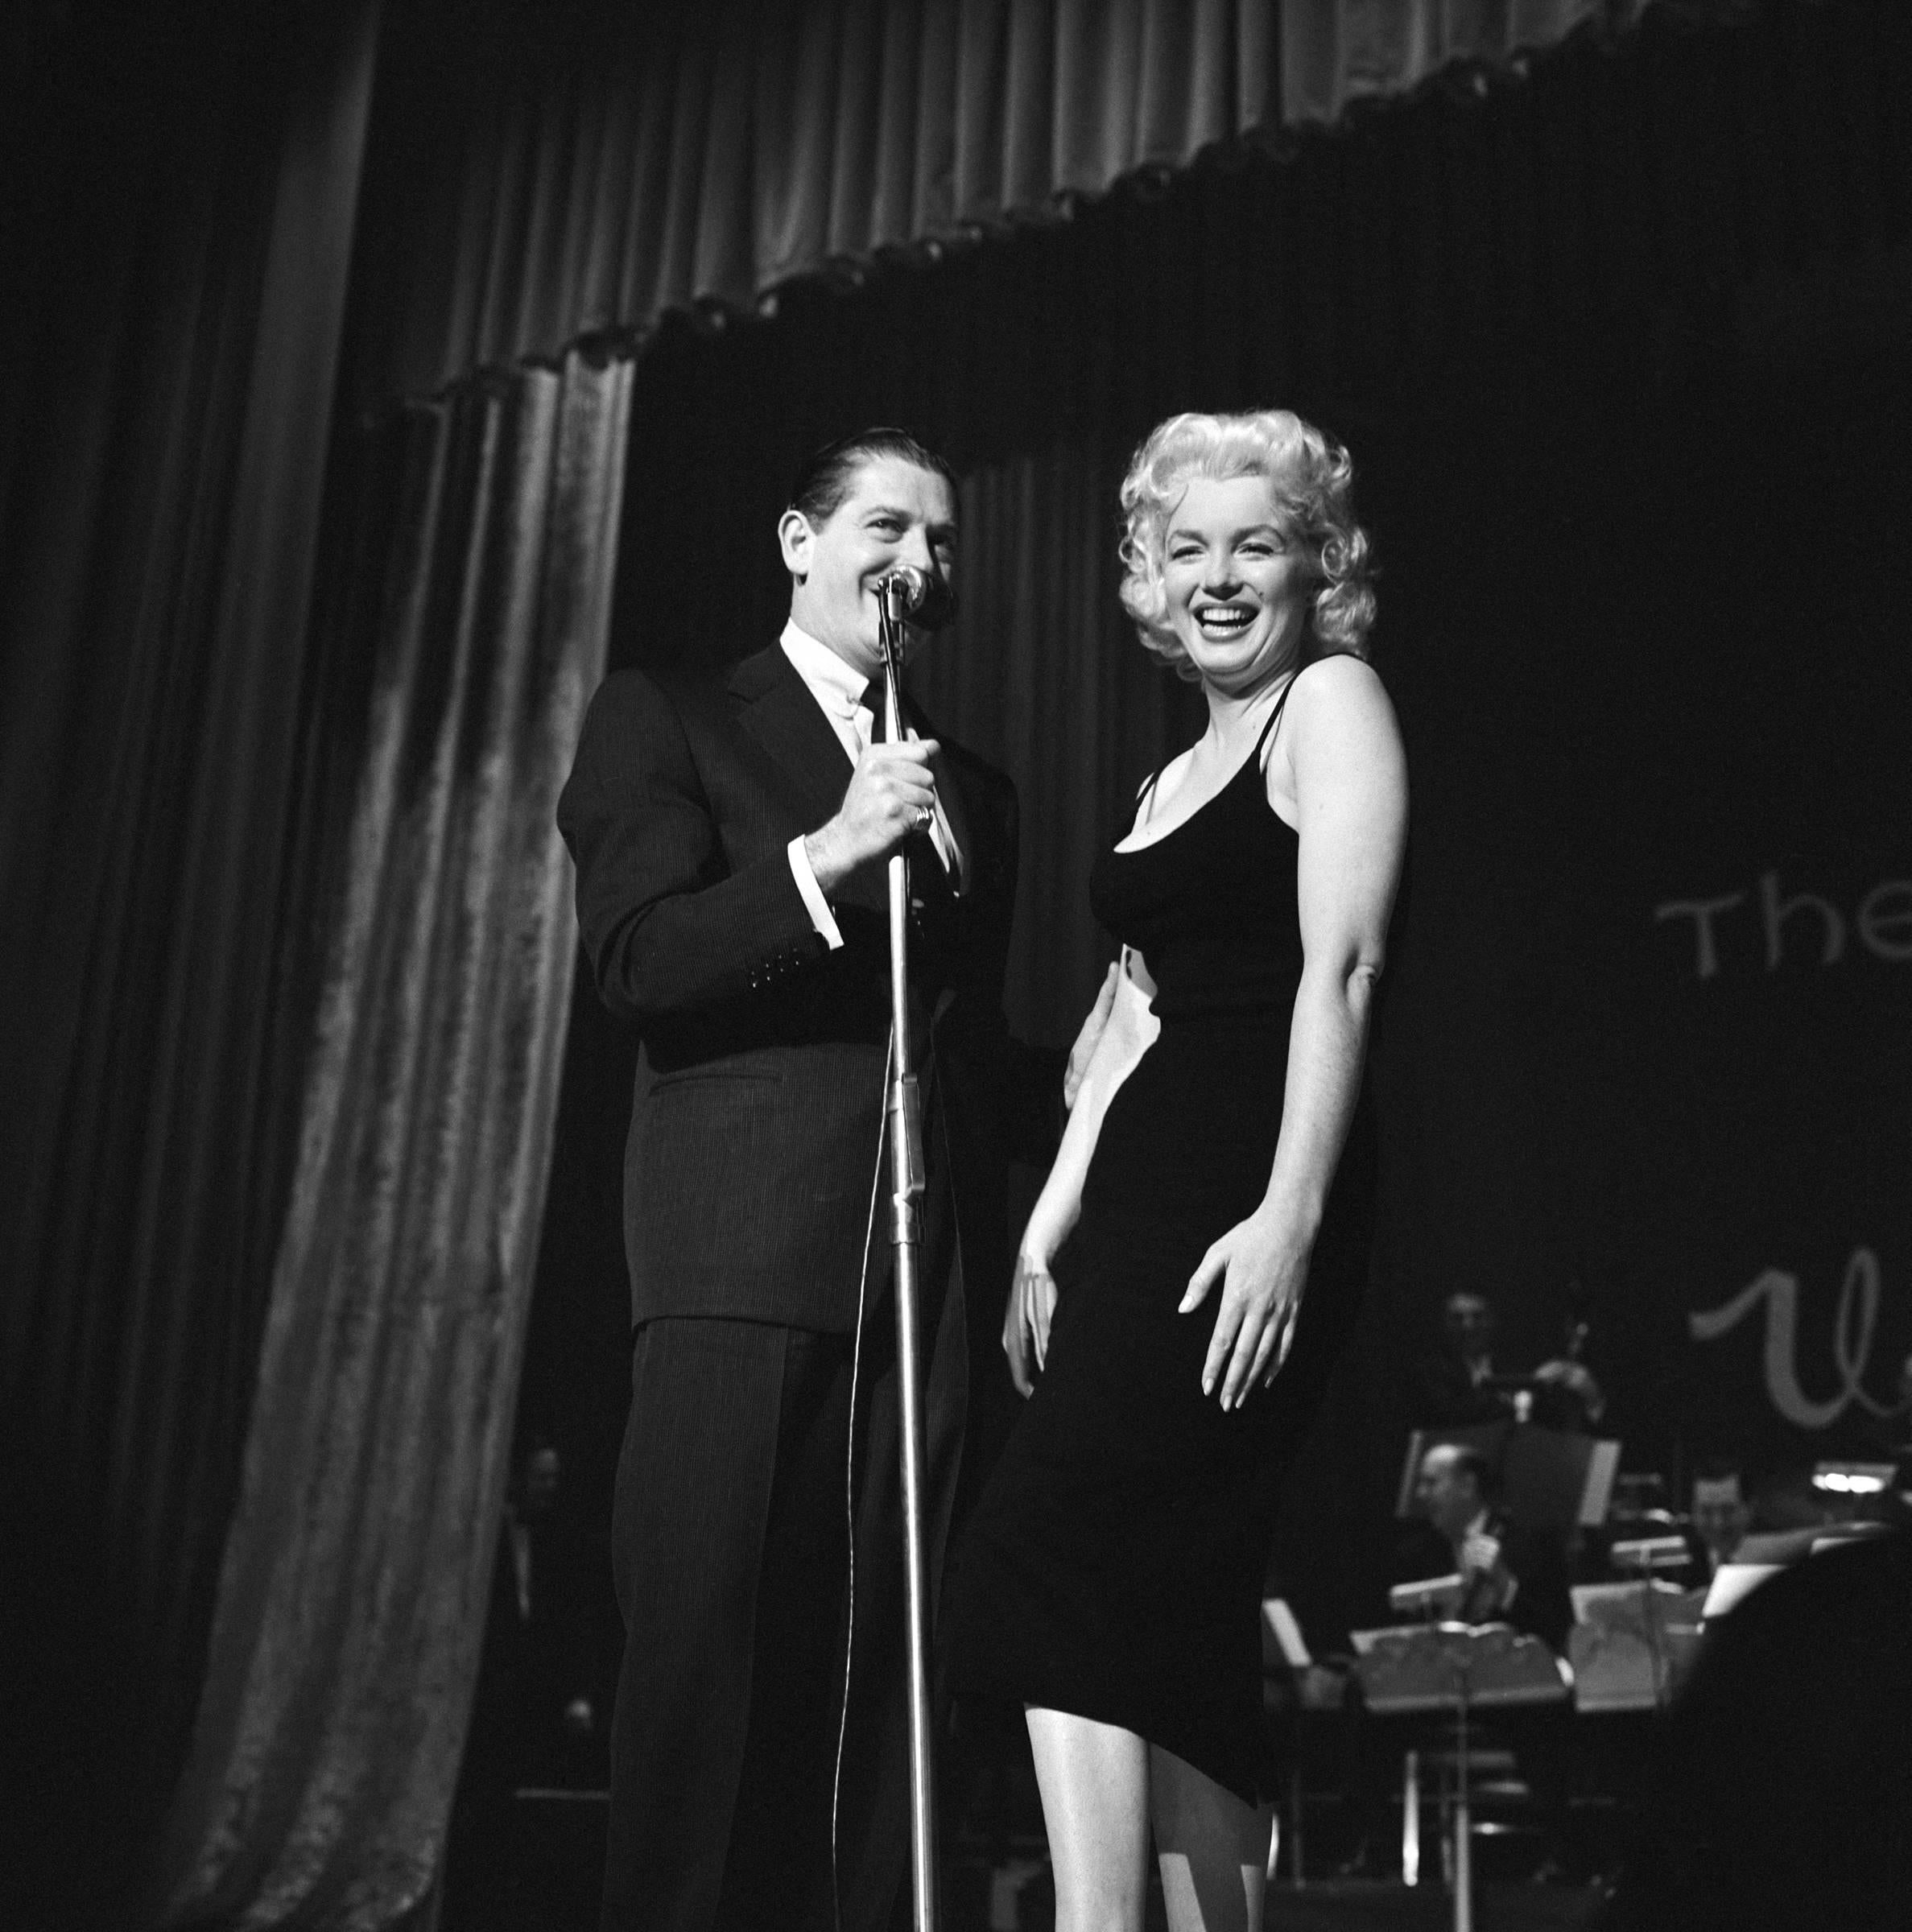 Frank Worth Portrait Photograph - Marilyn Monroe and Milton Berle on Stage Fine Art Print